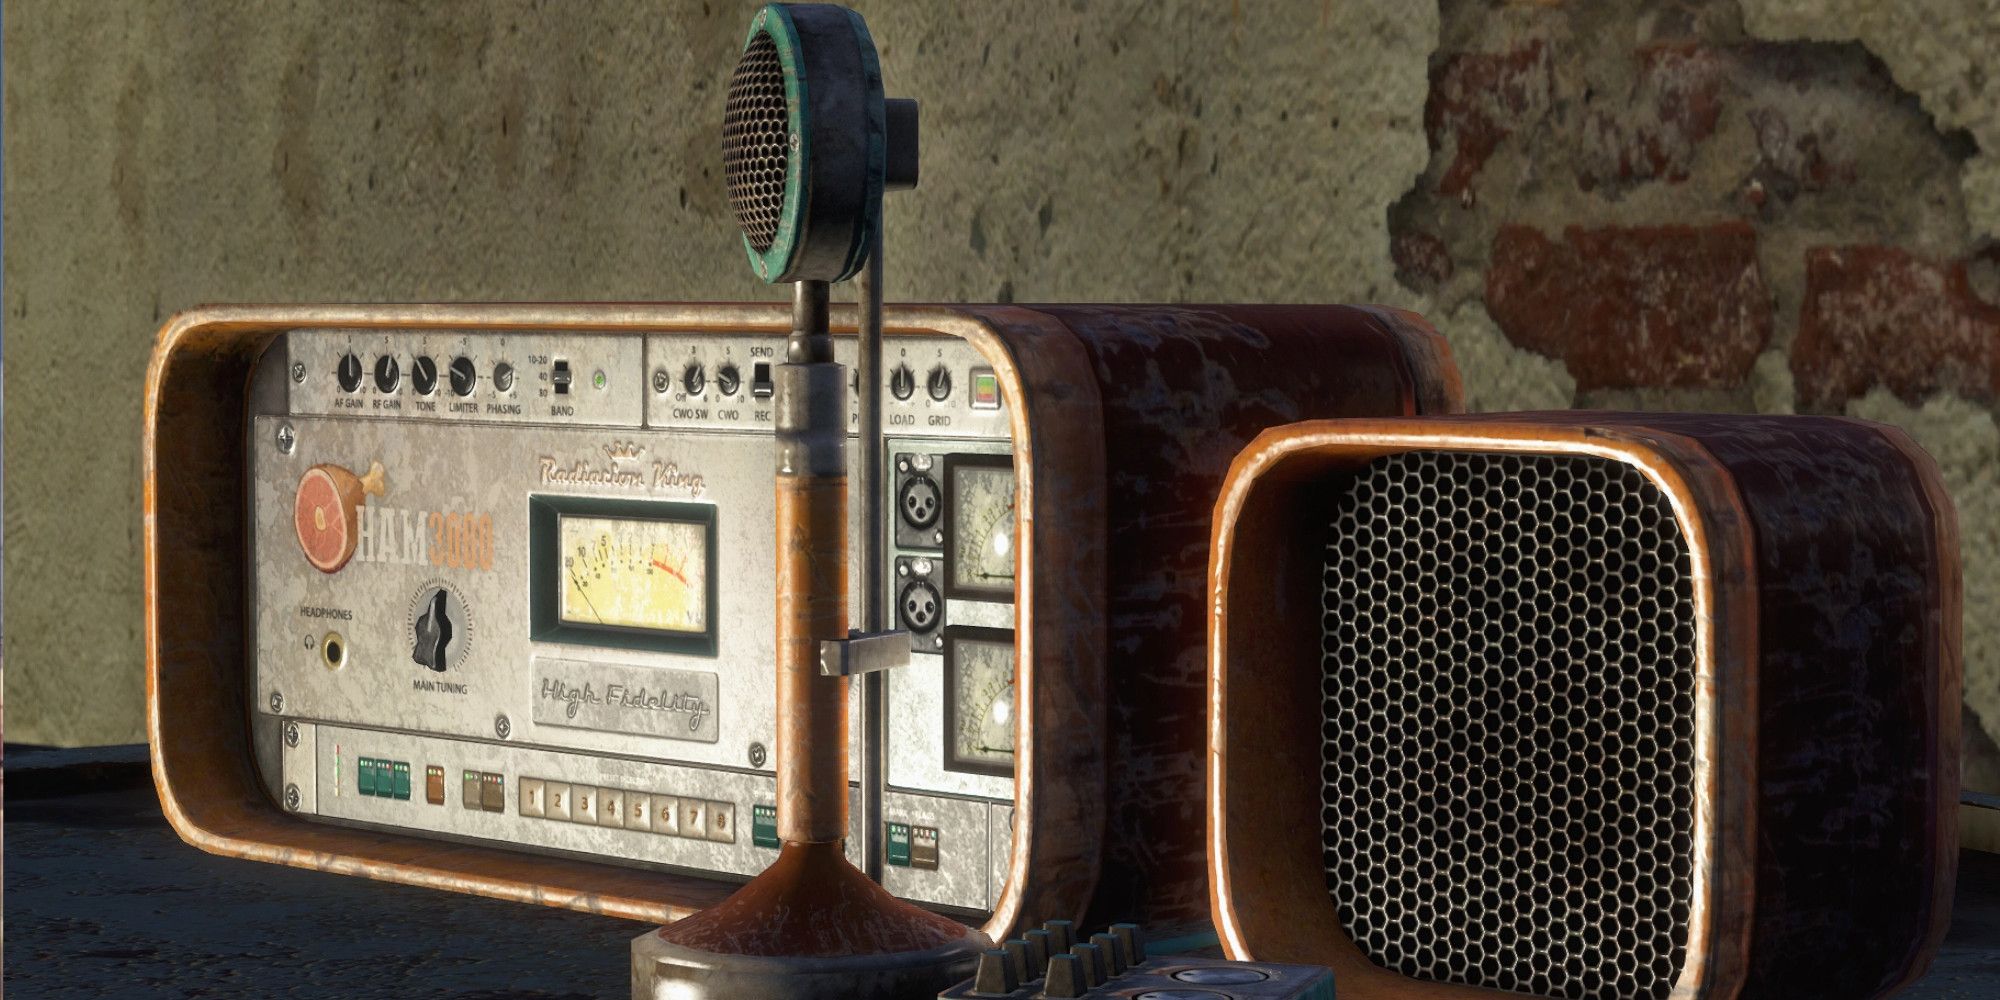 Ham radios in Fallout 4